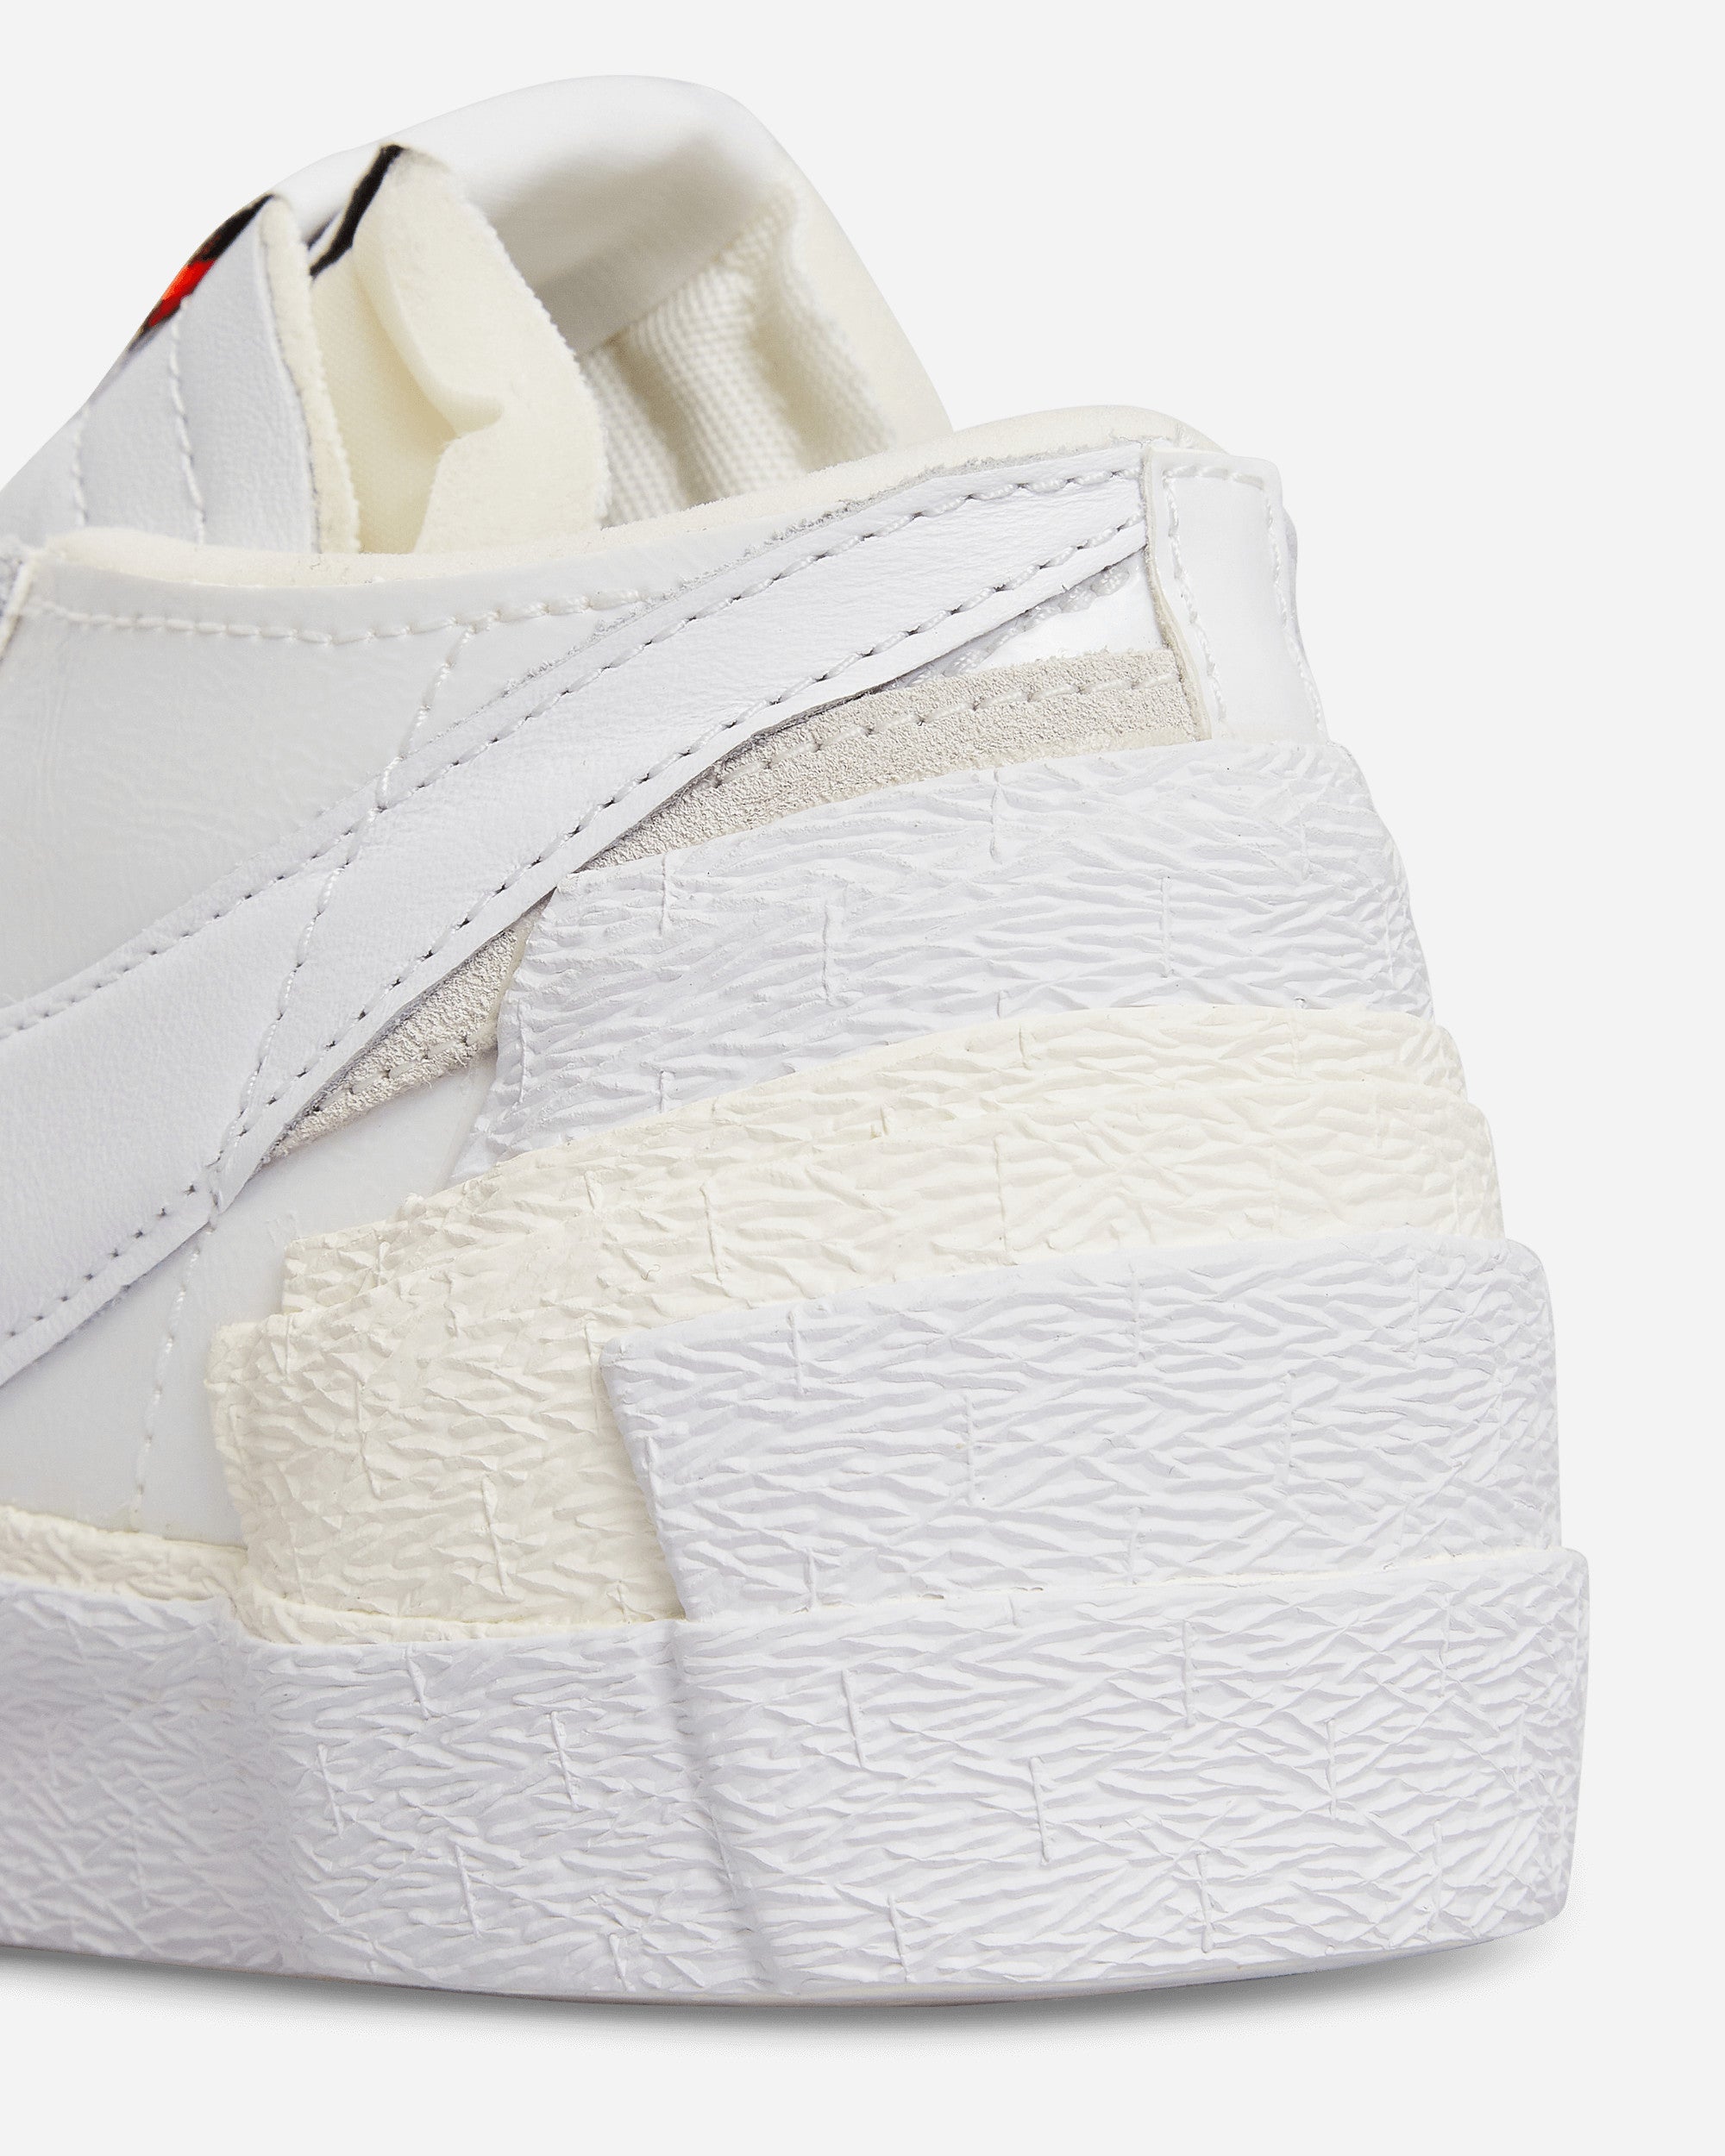 Nike Special Project Blazer Low/ Sacai White/Sail Sneakers Low DM6443-100